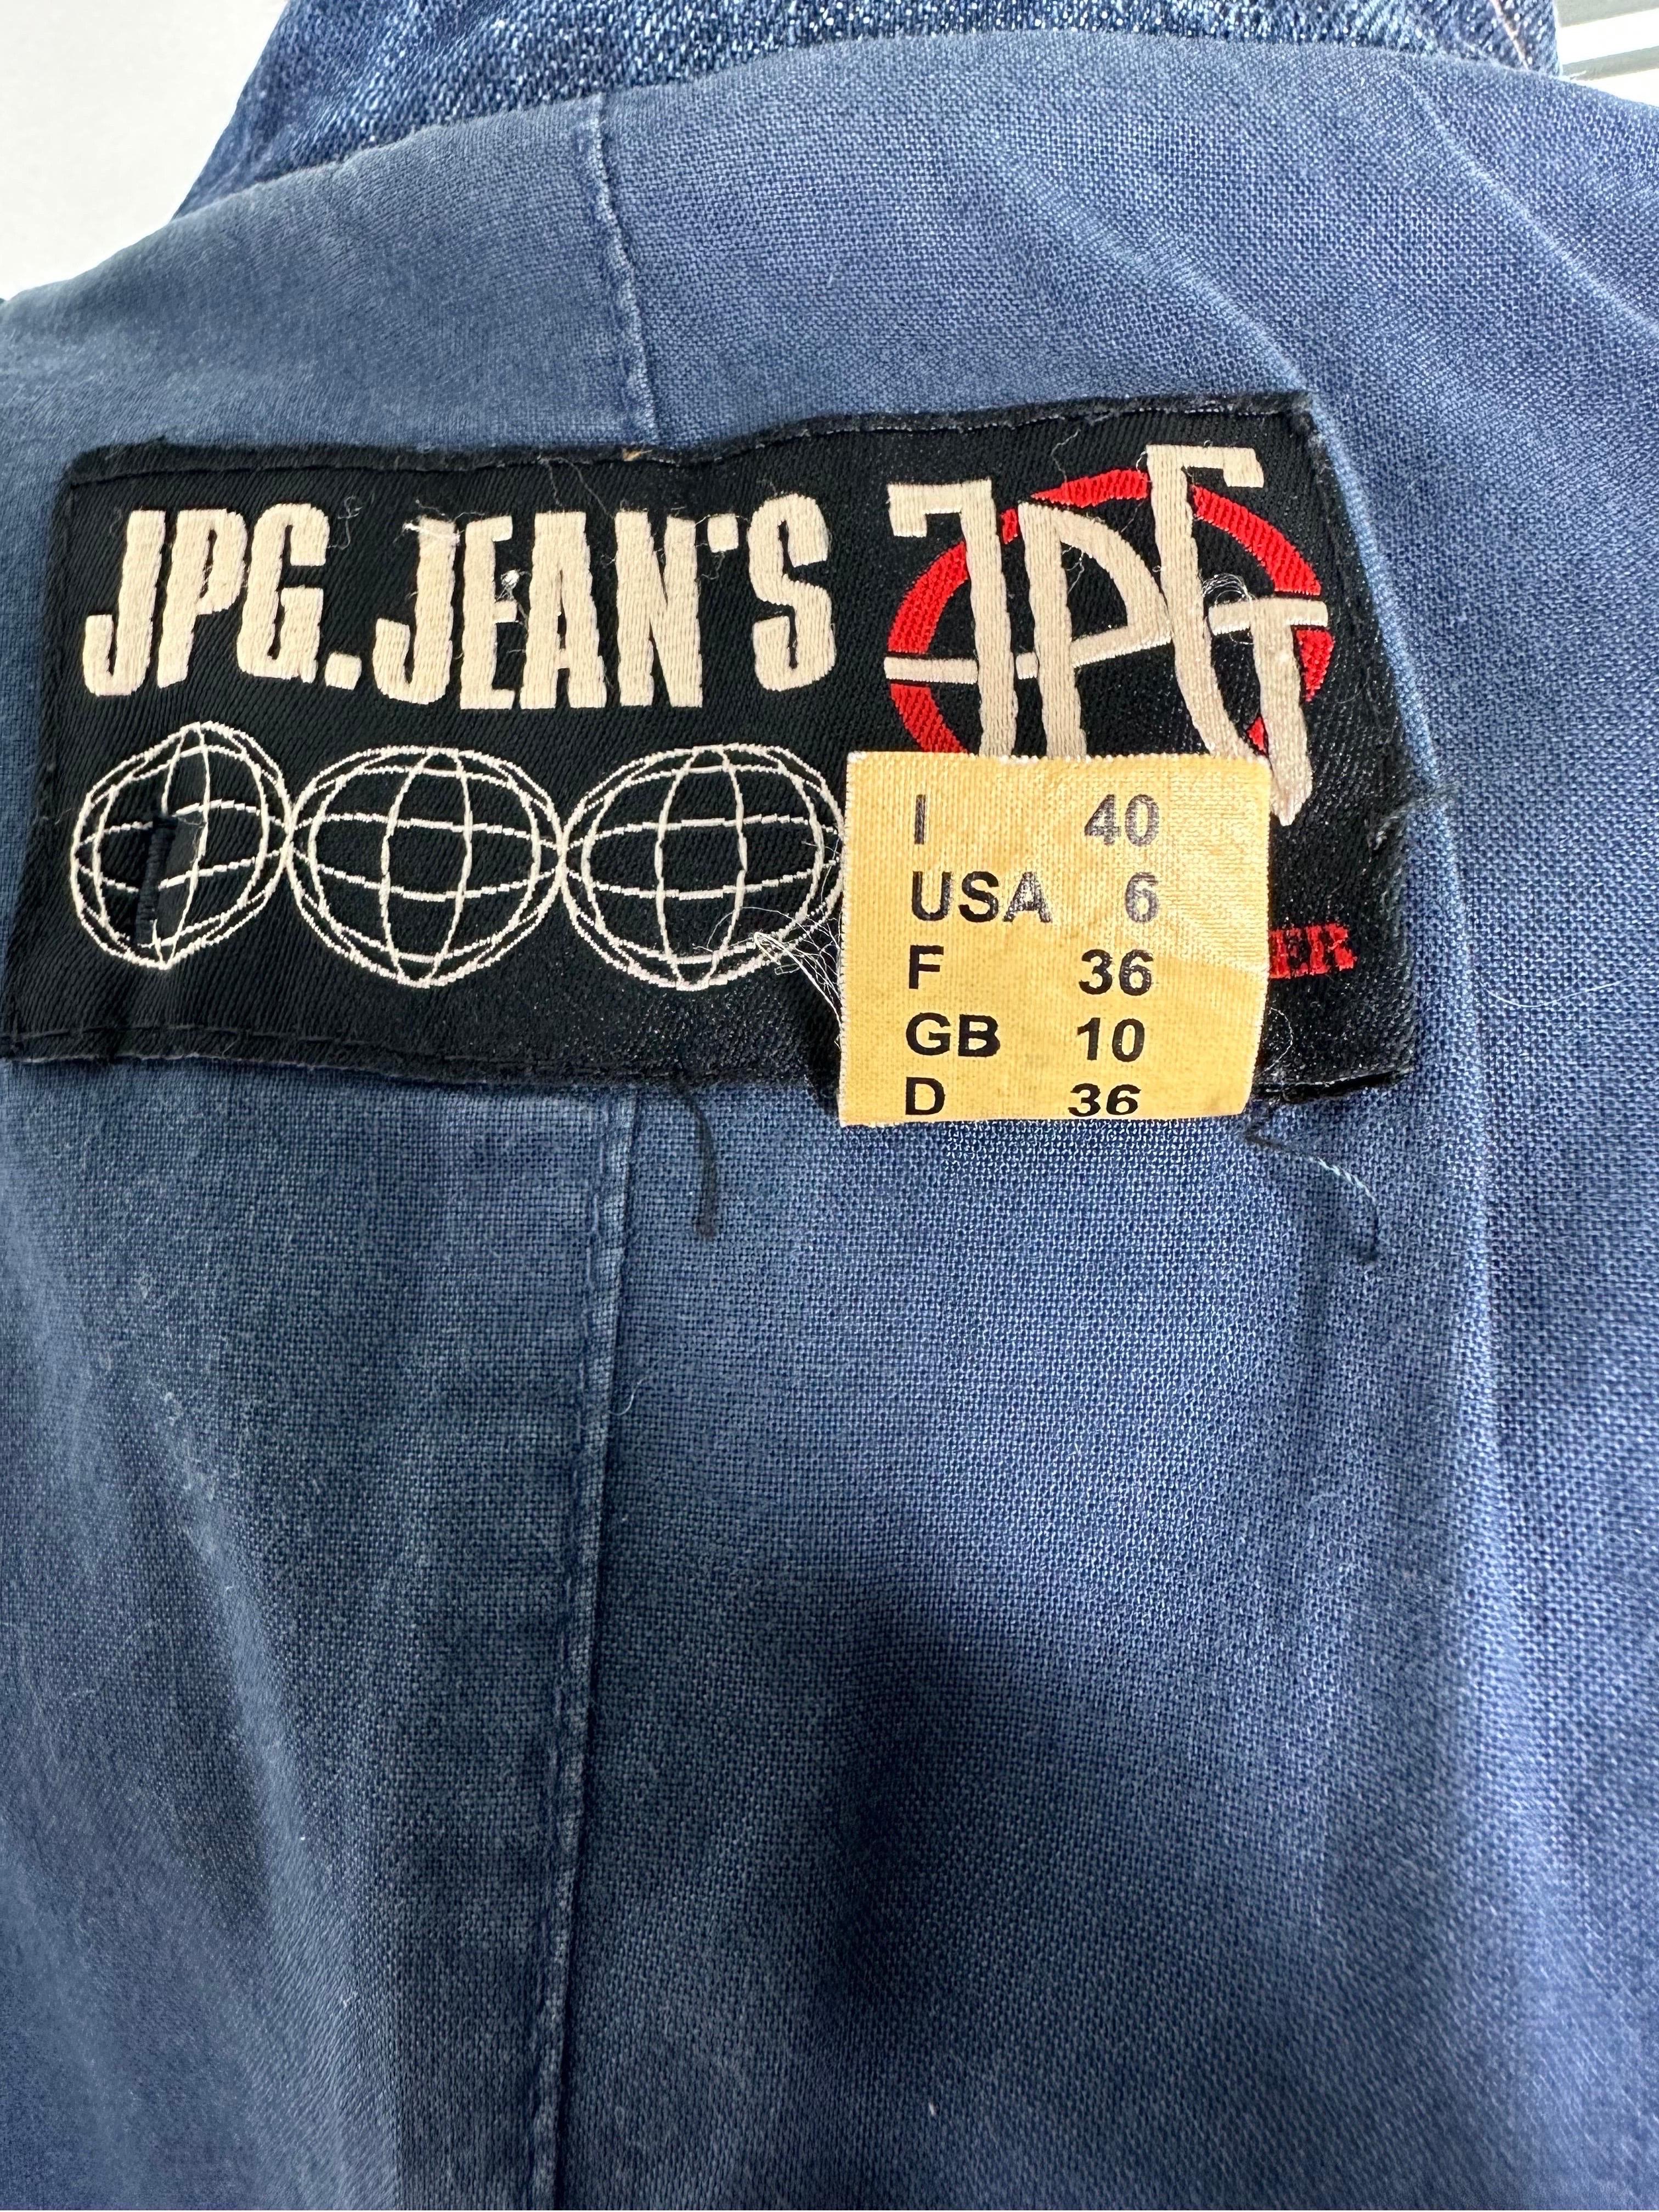 Jean Paul Gaultier vintage jeans tails jacket For Sale 8